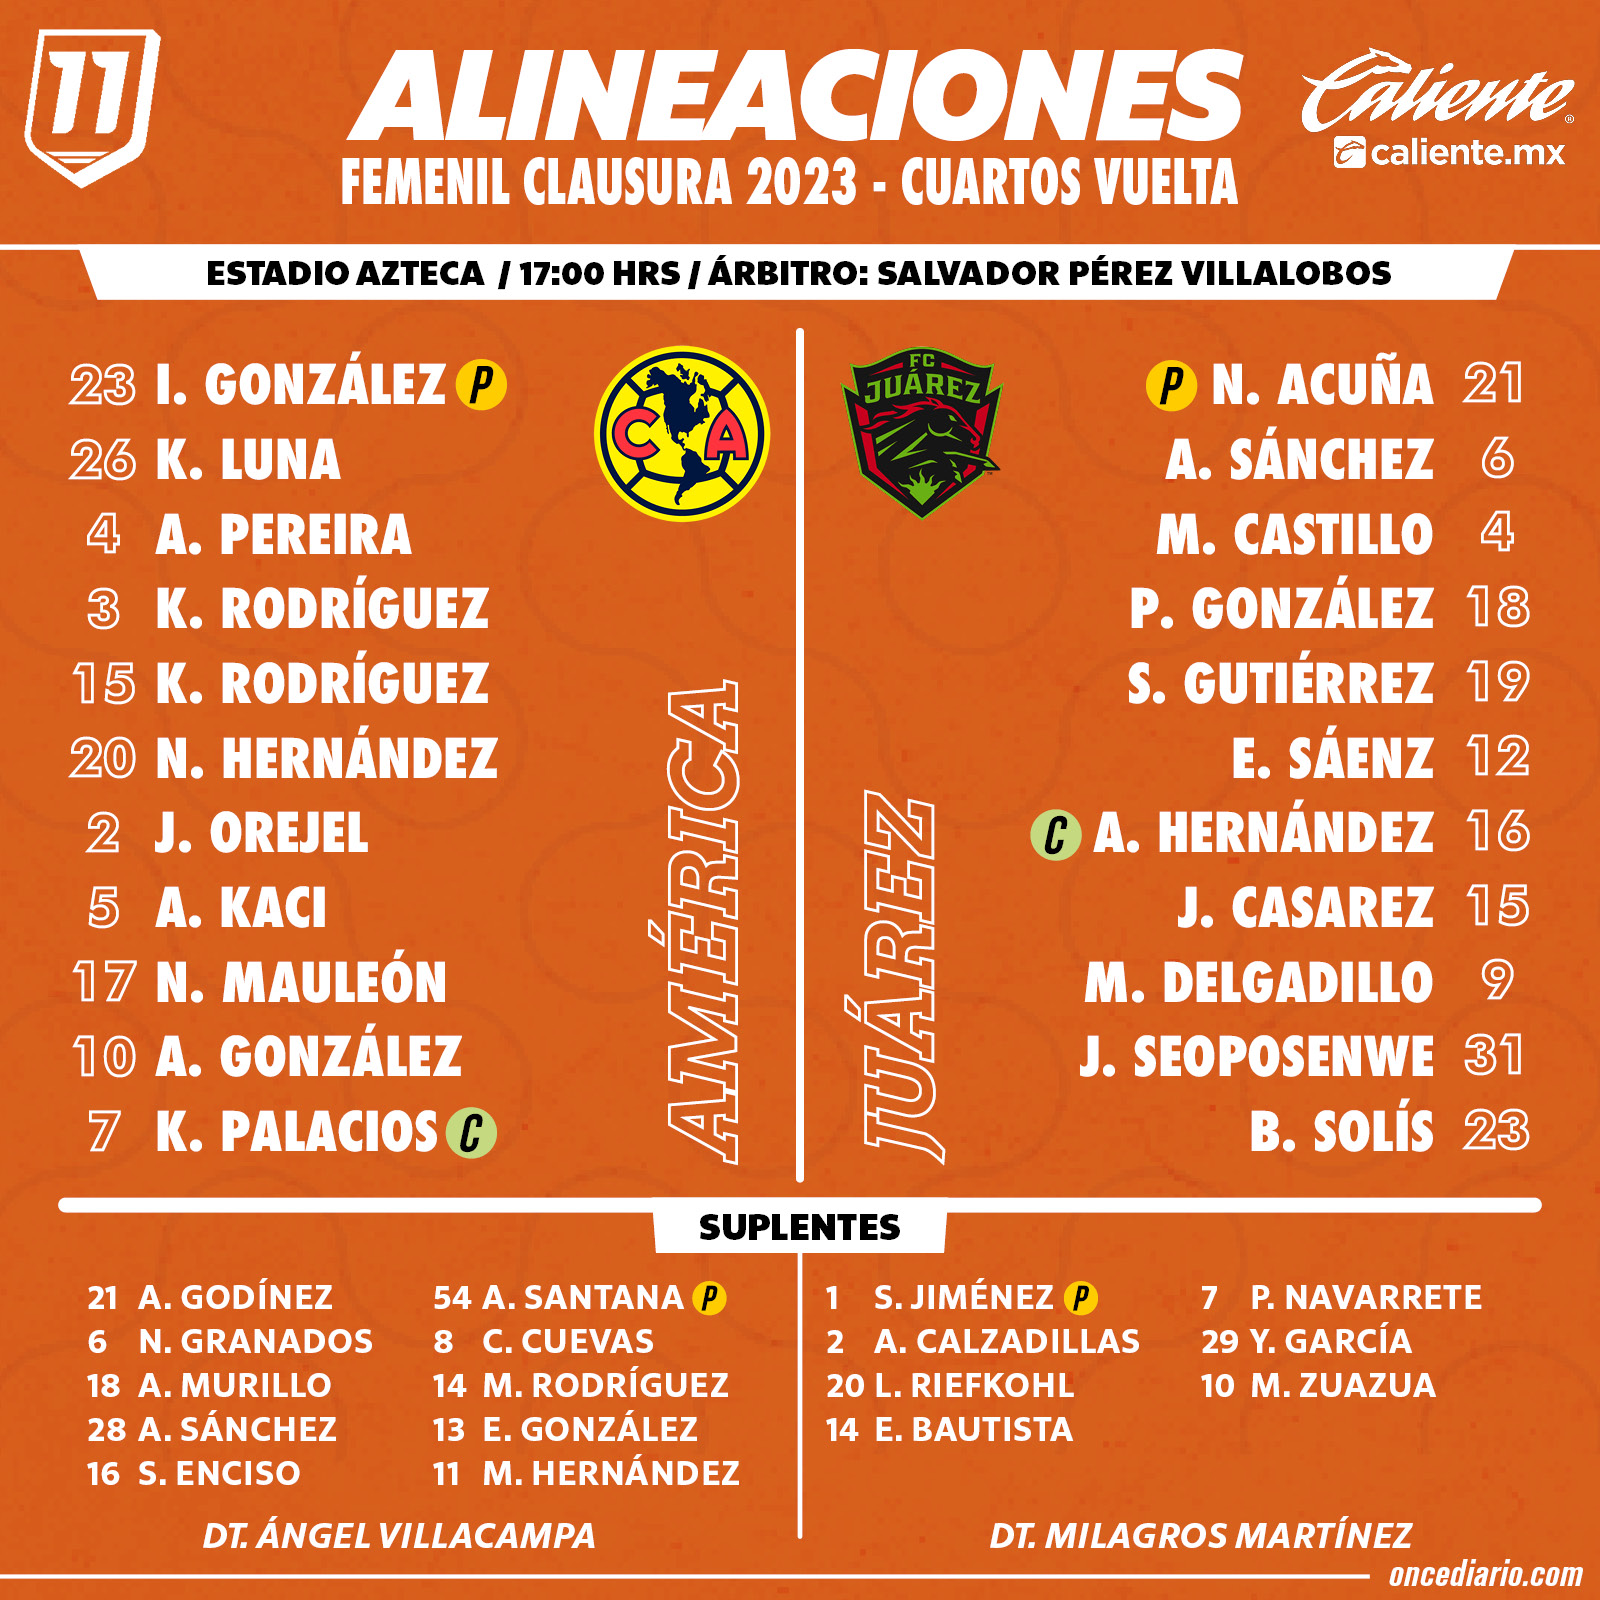 Alineaciones del América Femenil vs. FC Juárez Femenil